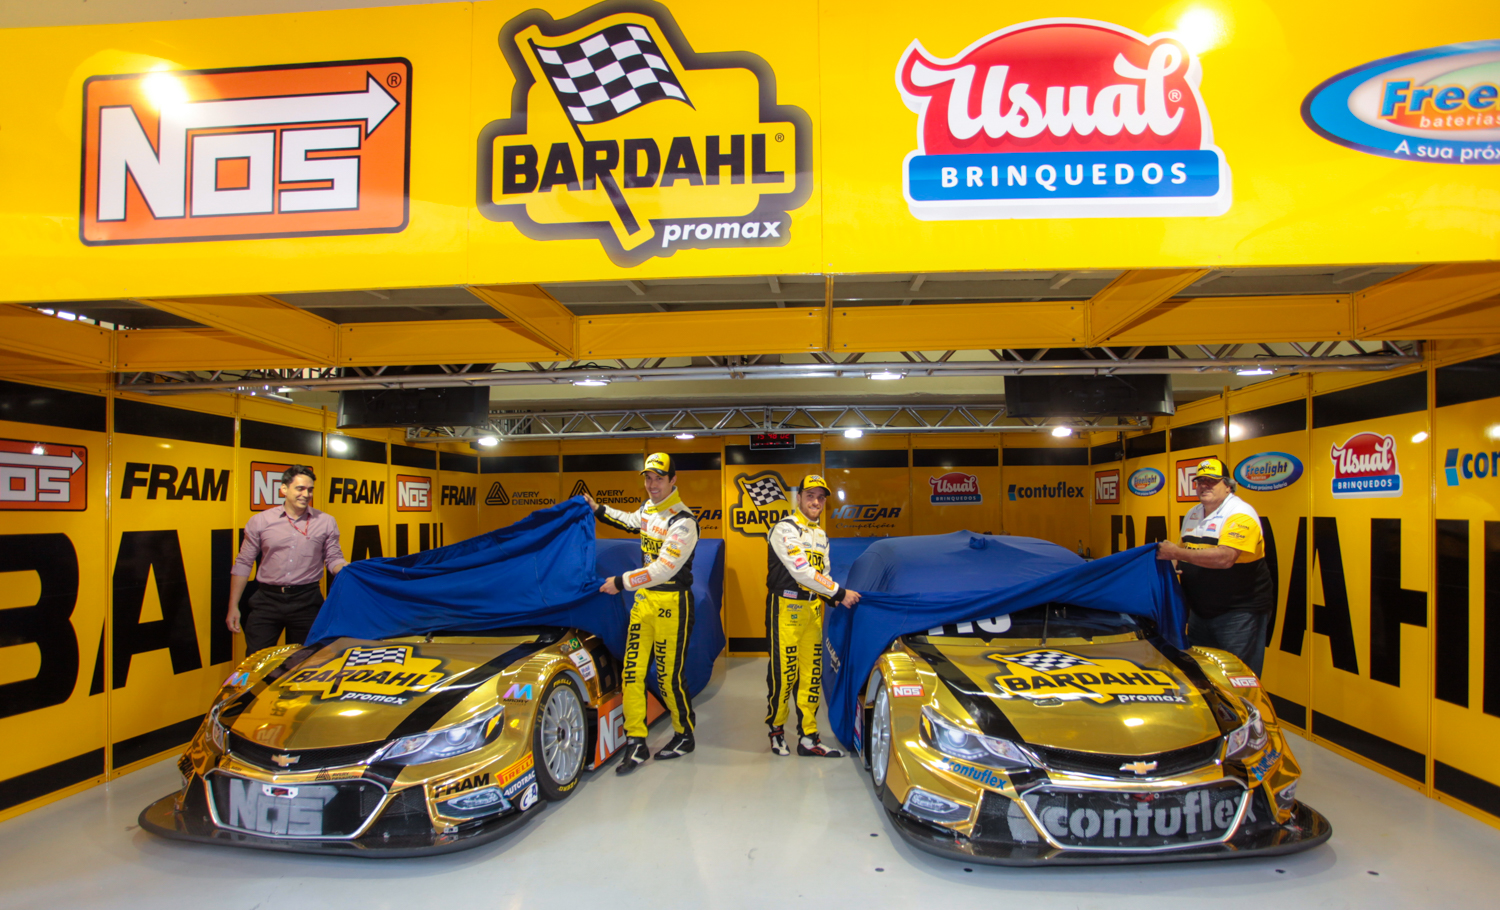 GT Sprint Race fecha temporada celebrando a Nascar Brasil -Militec Brasil